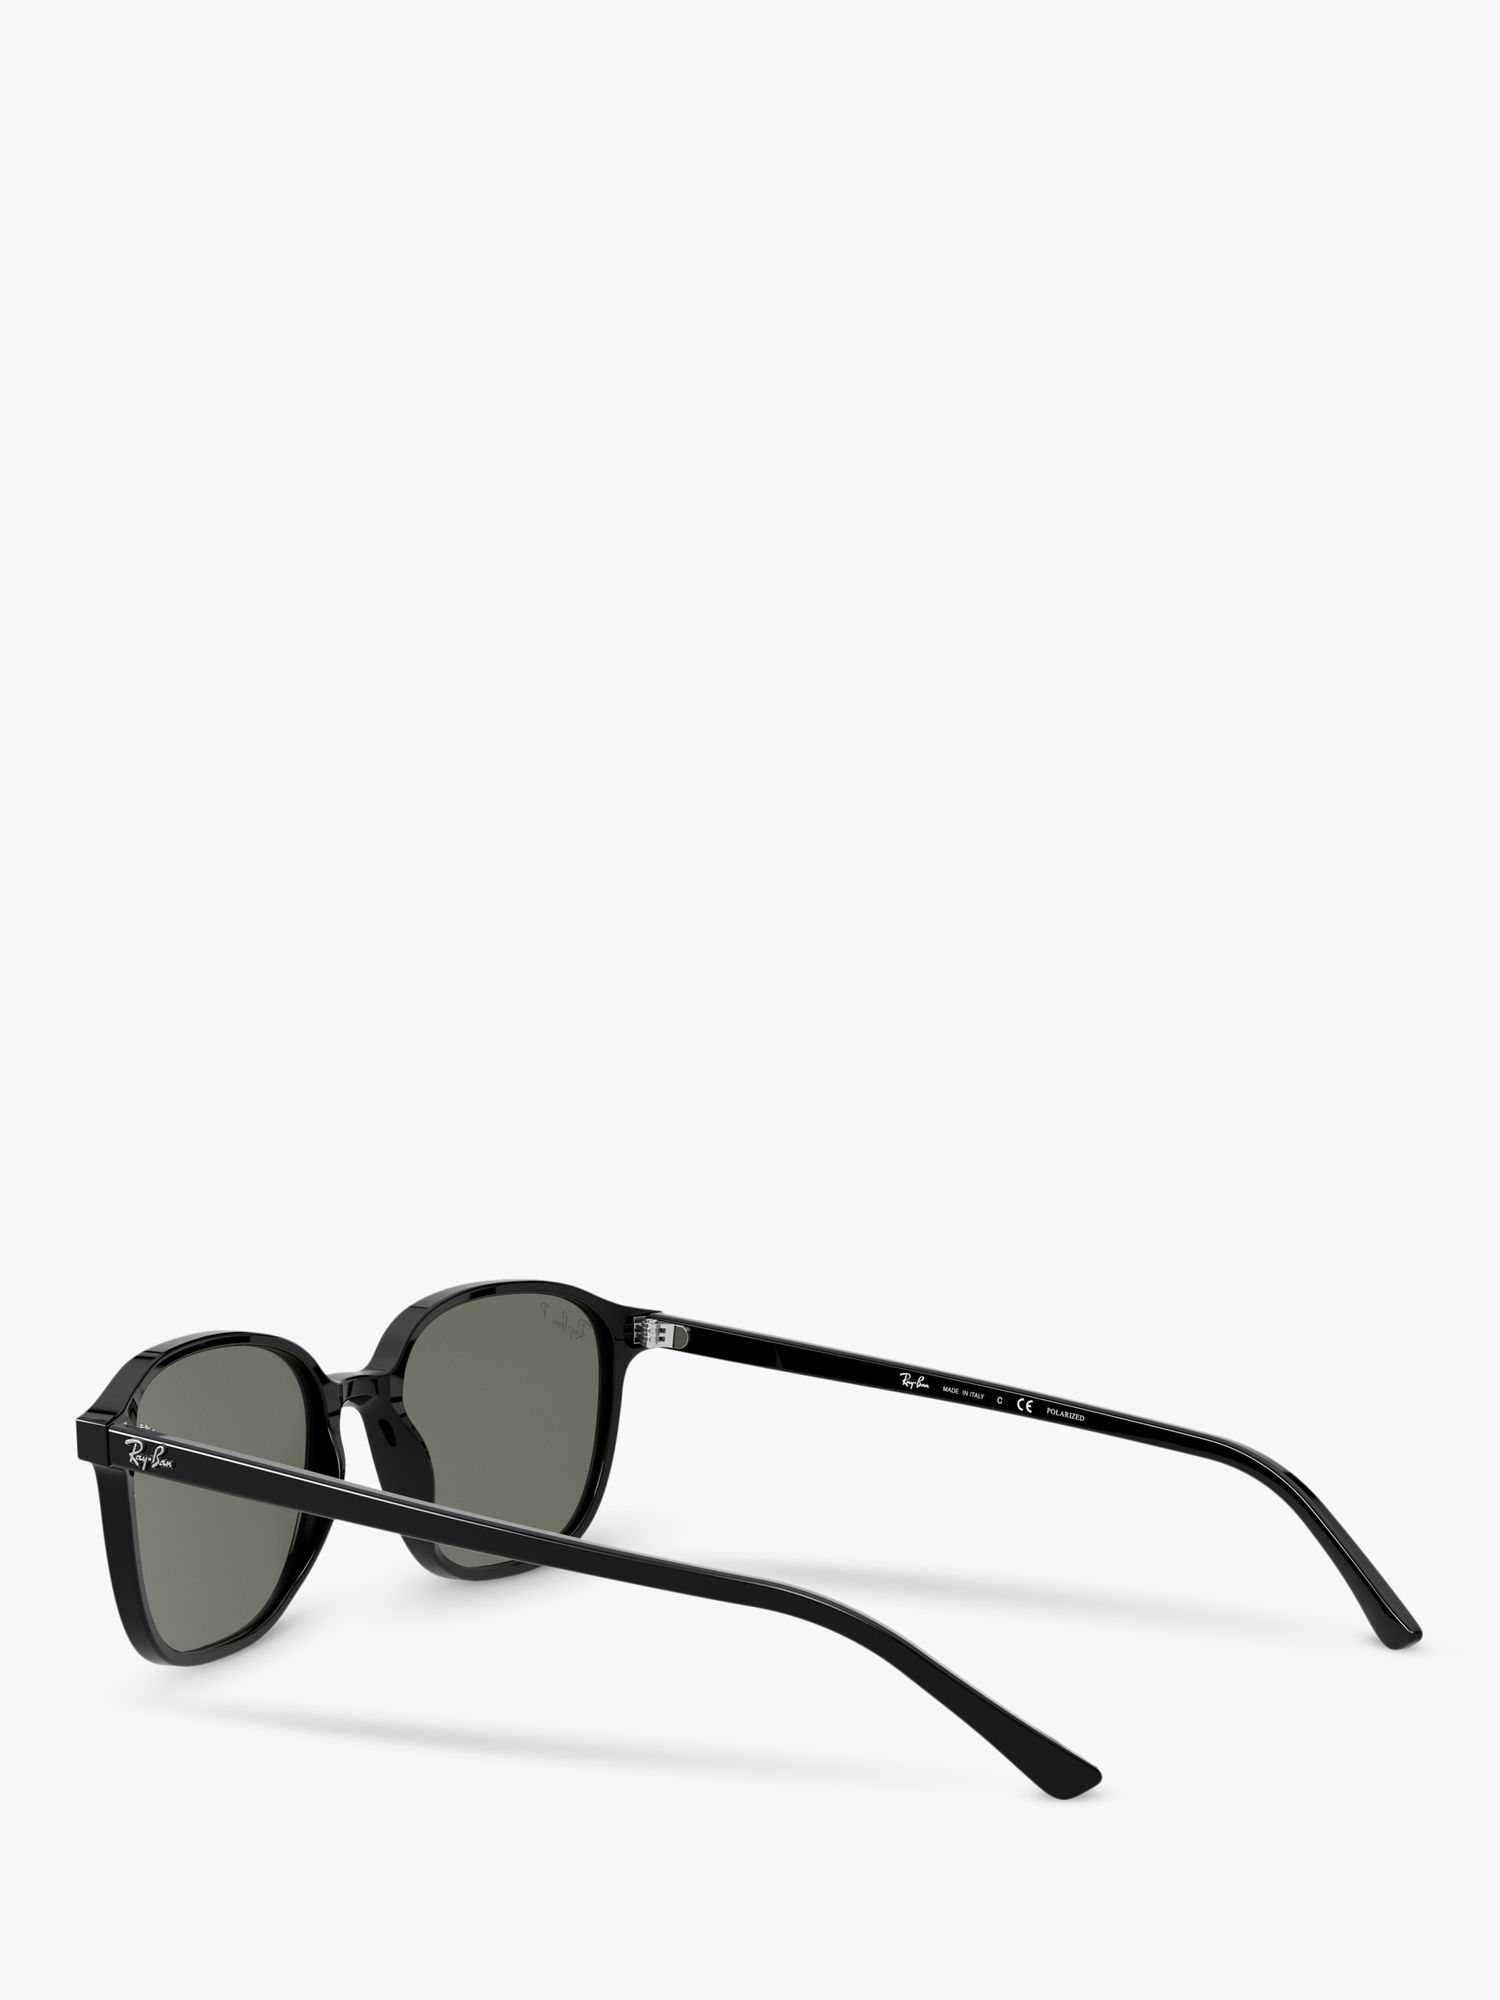 Ray-Ban RB2193 Unisex Polarised Square Sunglasses, Black/Grey